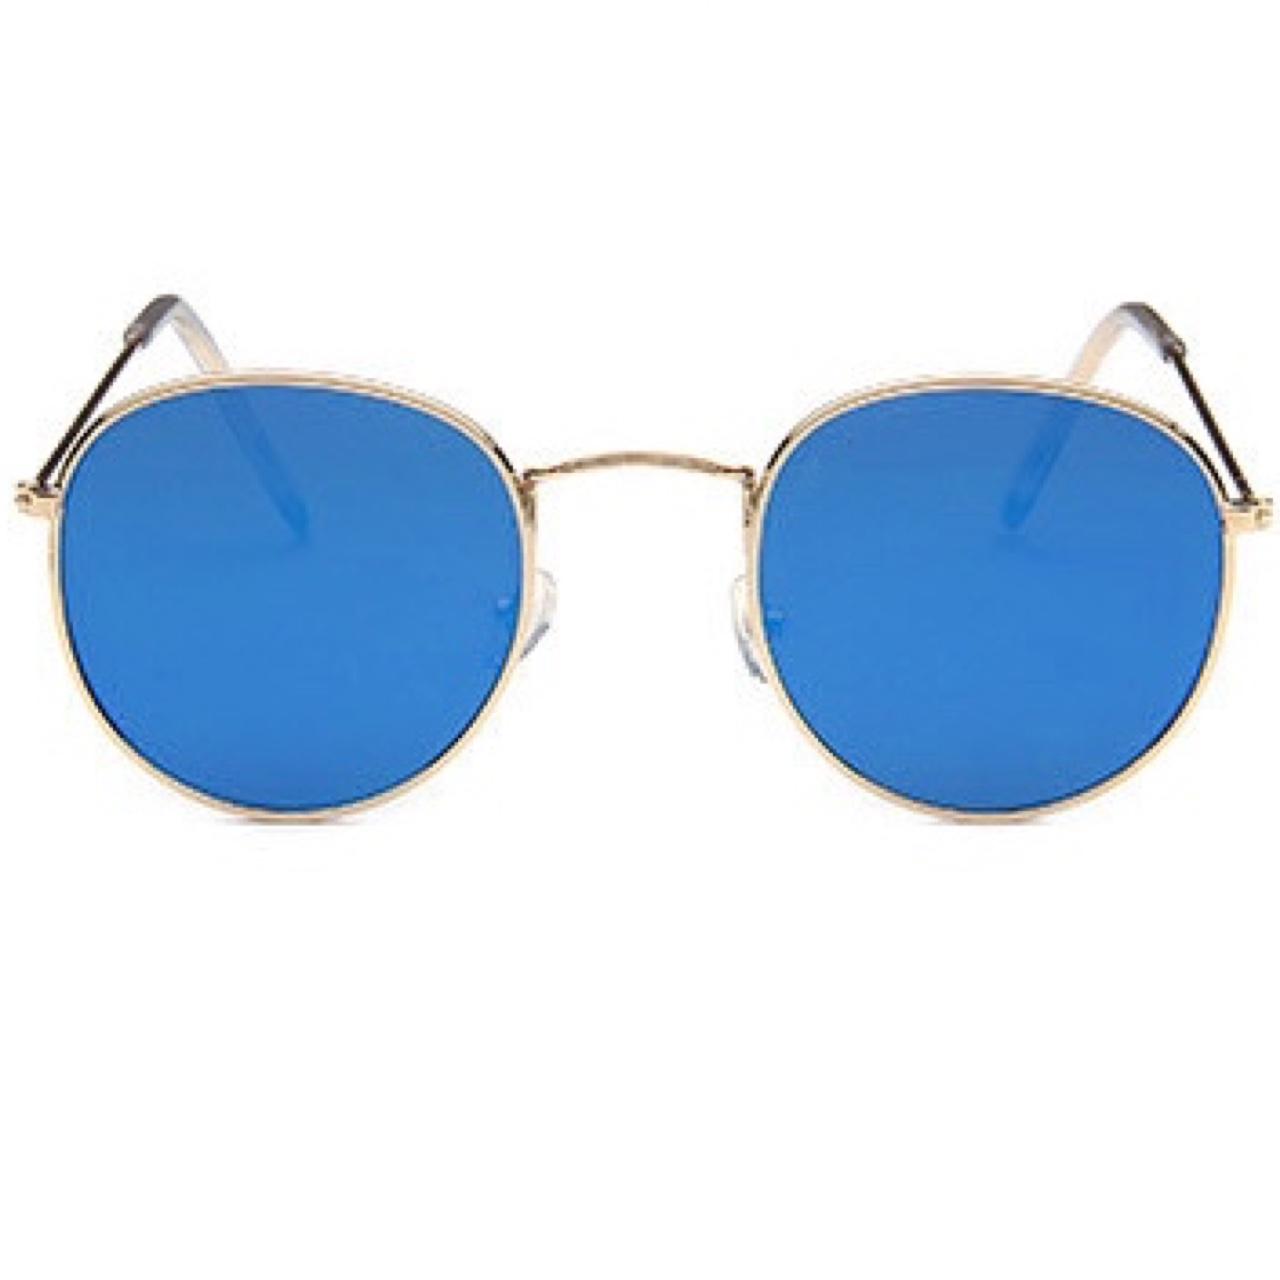 Women's Blue and Silver Sunglasses | Depop